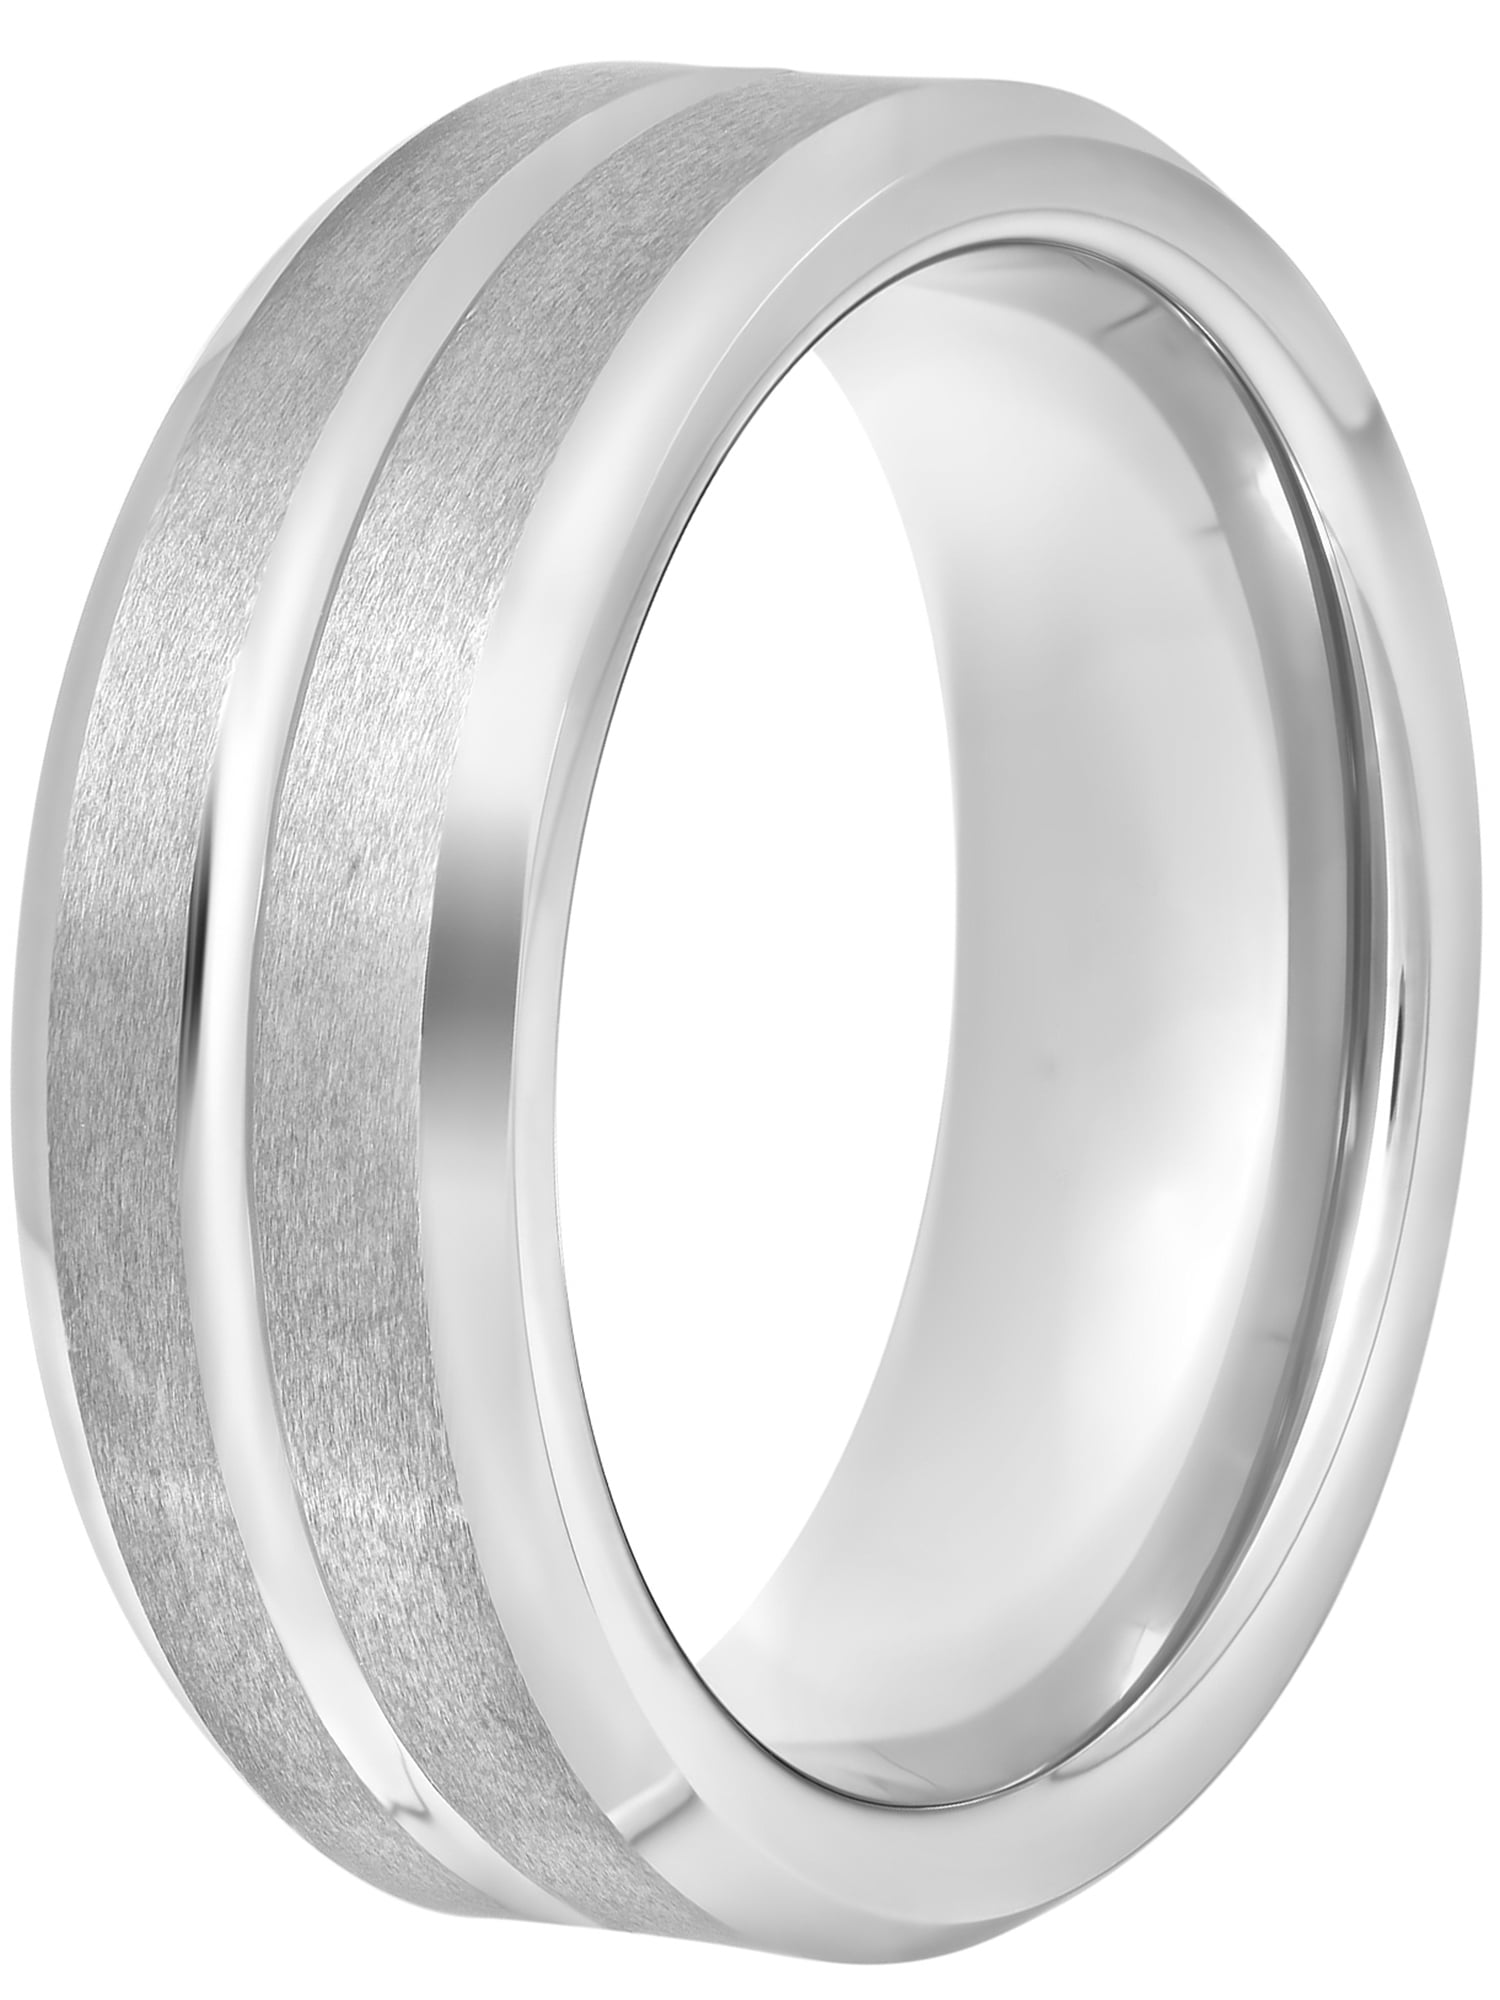 Men's Ring Comfort Ring Silver Tungsten Sterling Silver Plated Plain Ring 6 mm Men's Tungsten Ring Wedding Ring